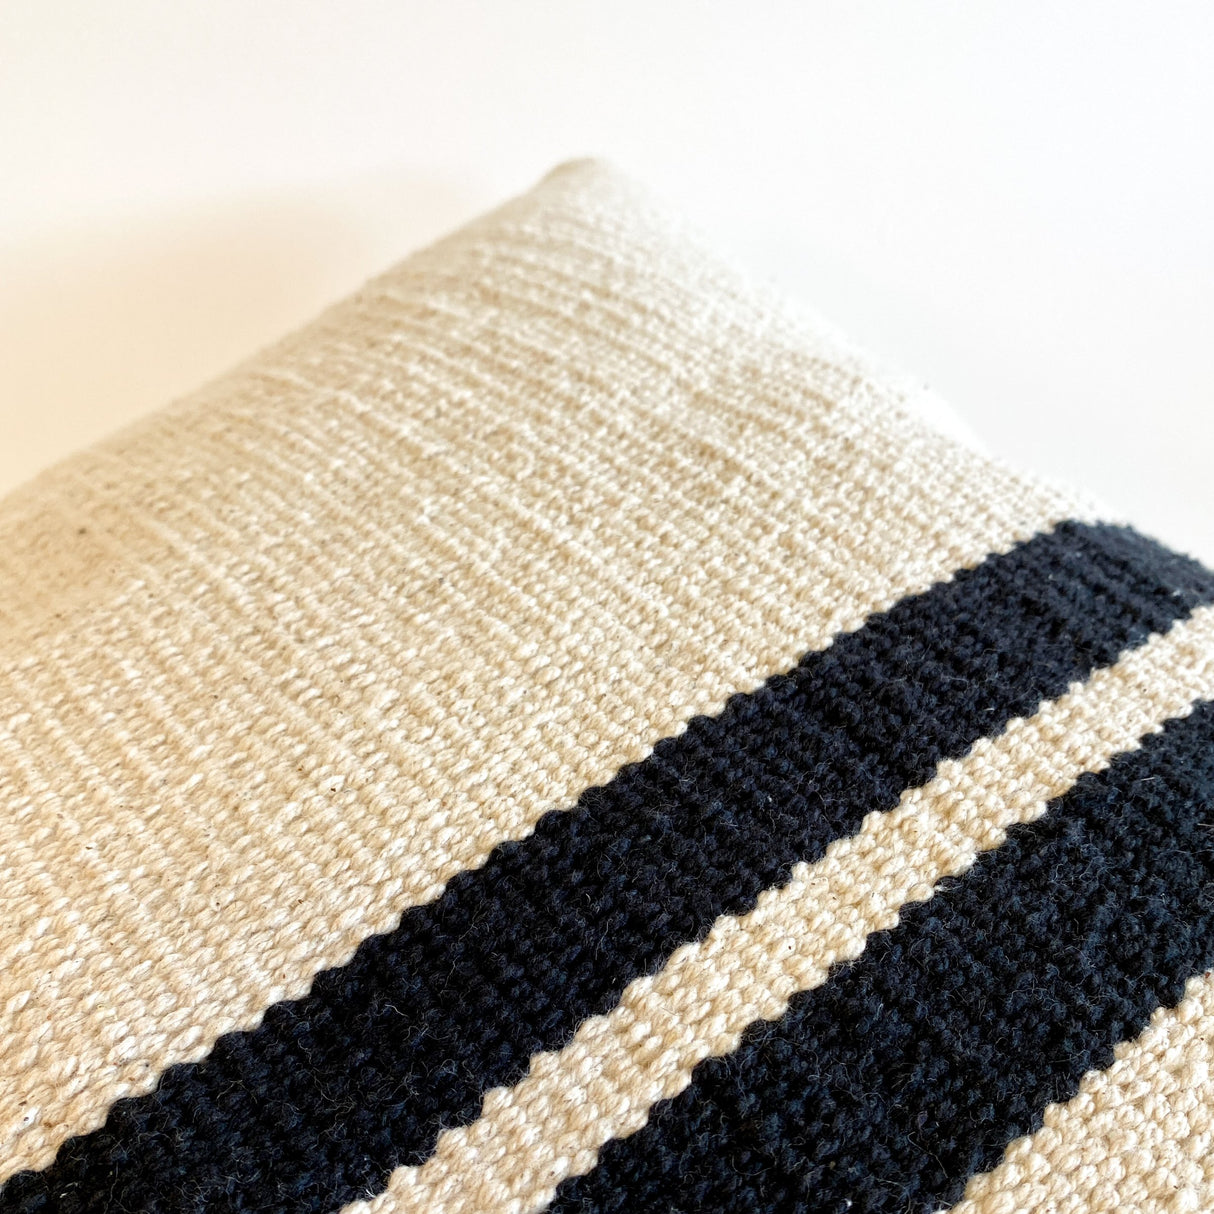 Viti Handwoven Black and Cream Pillow - The Loomia